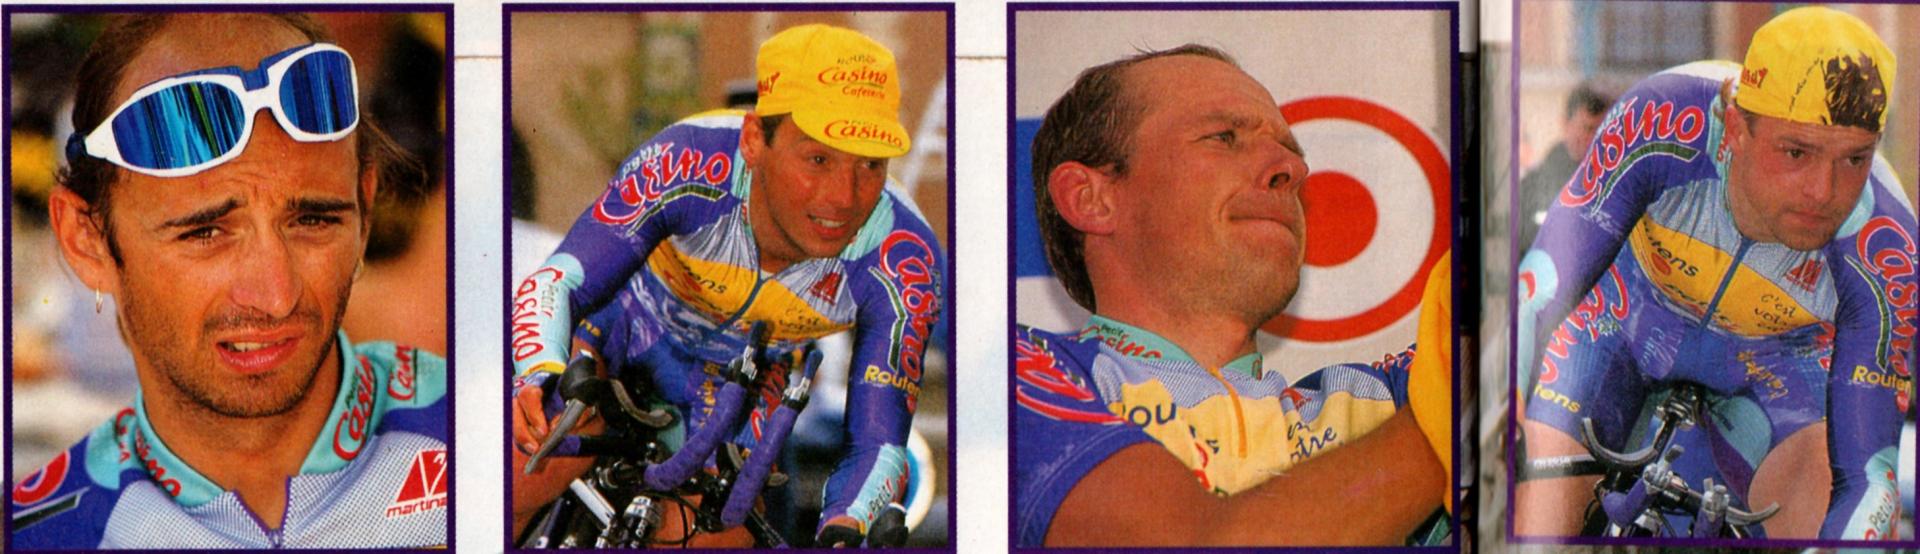 Cyclisme international 1996 de las cuevas chanteur kasputis kirsipuu